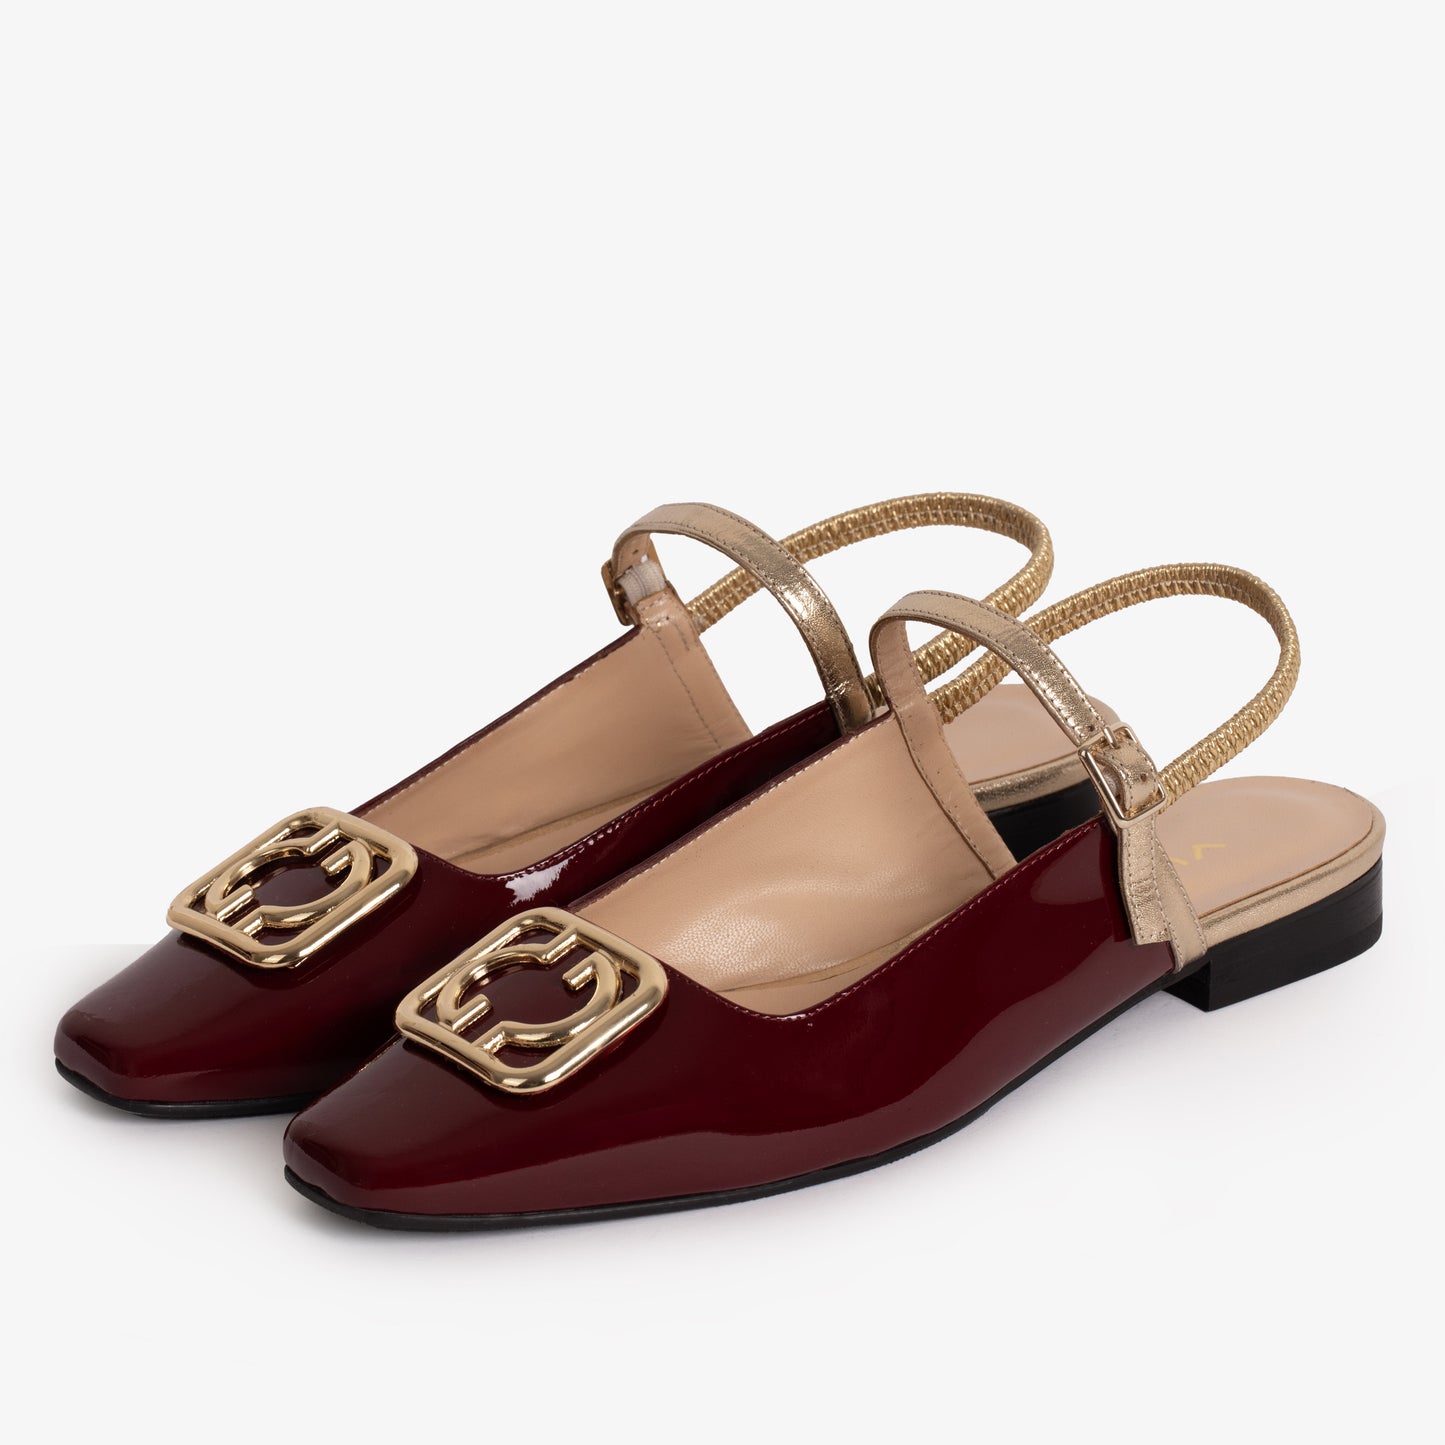 The Rosalinda Burgundy Patent Leather Women Flat Slingback Shoe